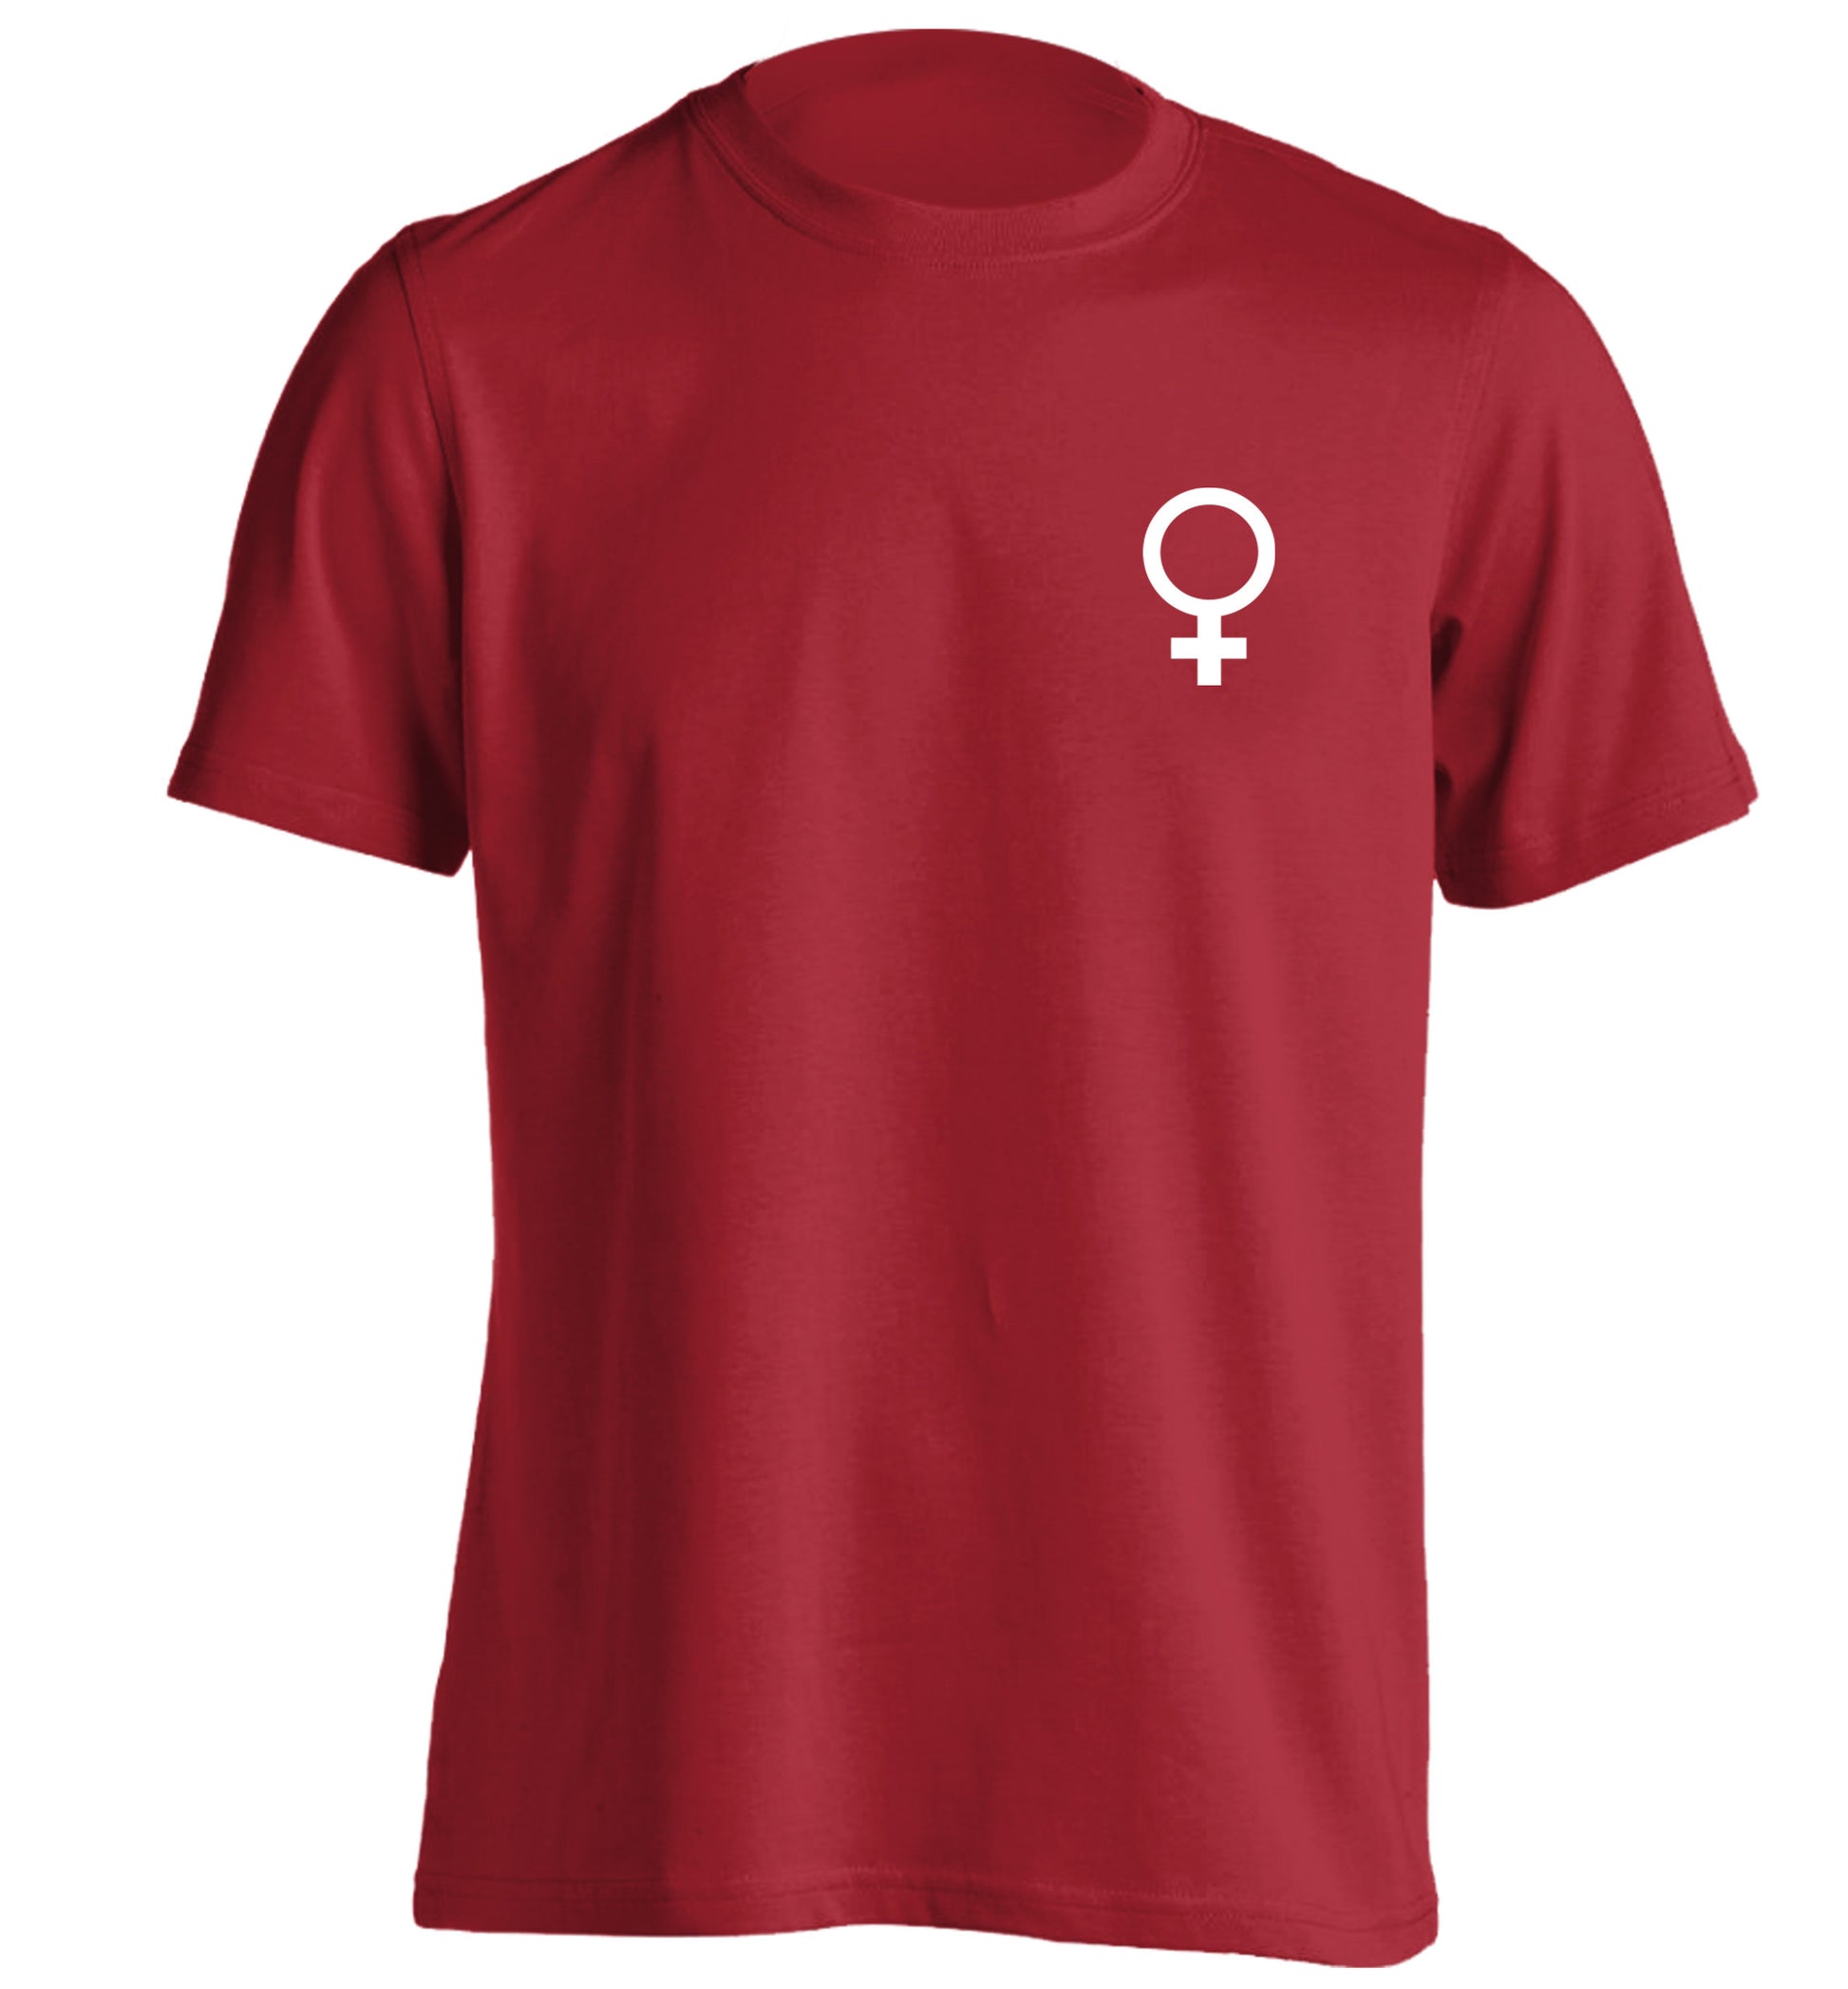 Female pocket symbol adults unisex red Tshirt 2XL